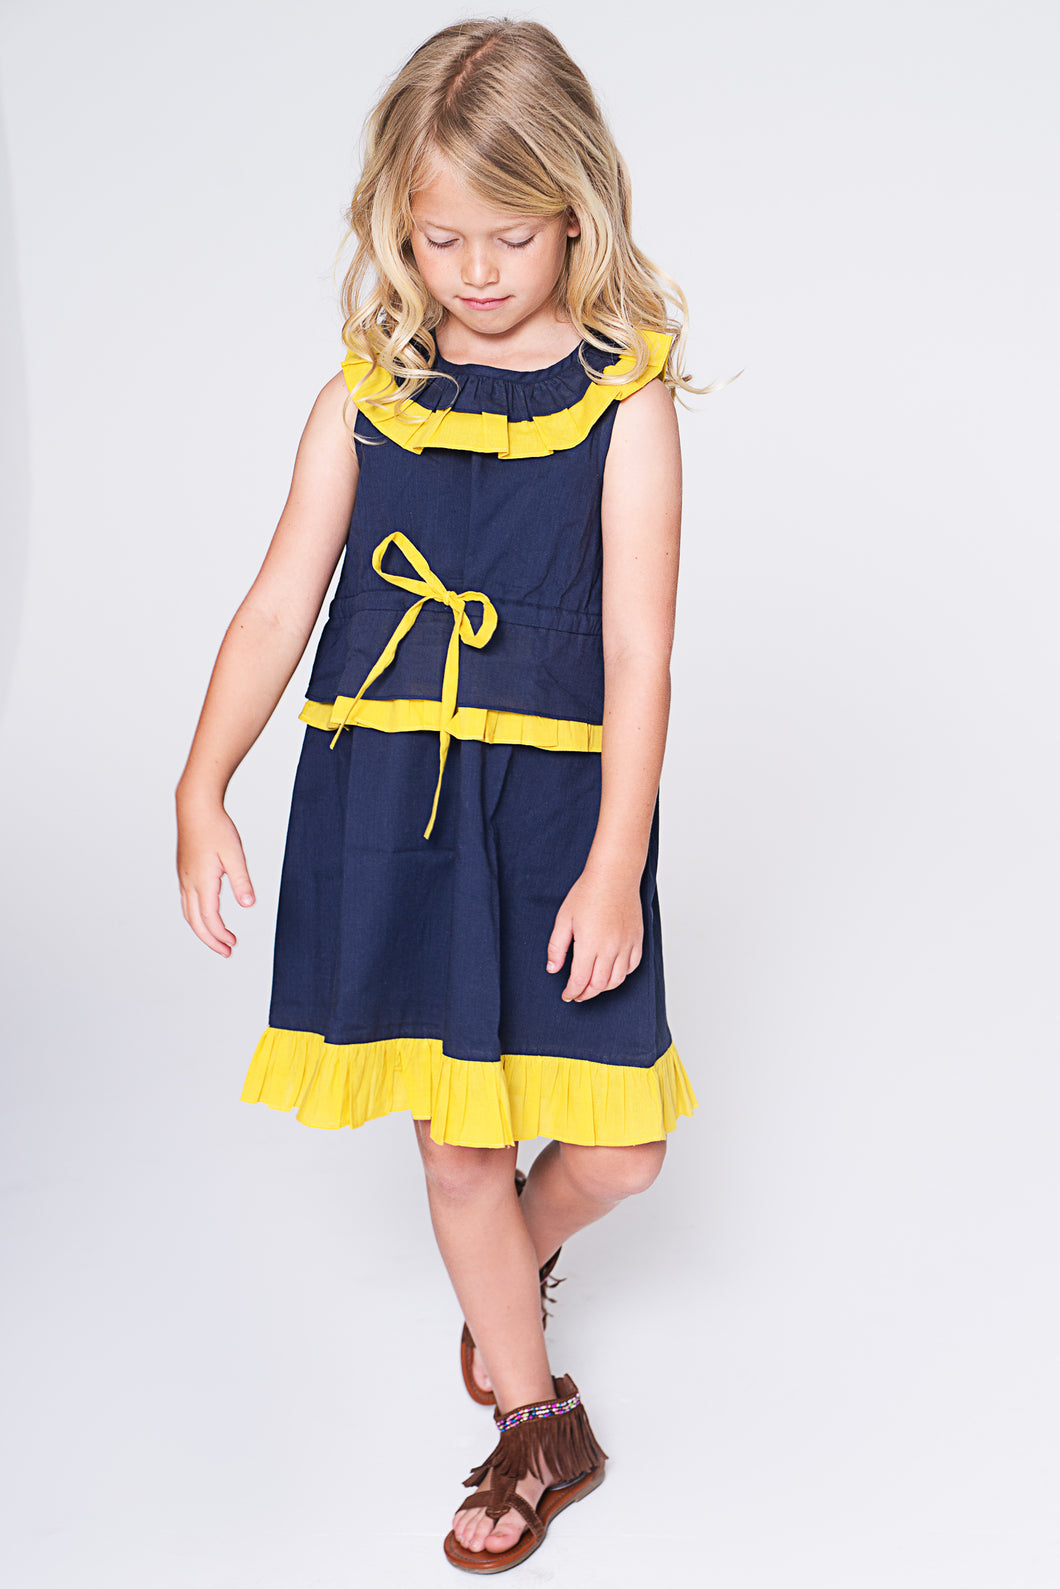 Navy and Yellow Dress - Kids Wholesale Boutique Clothing, Dress - Girls Dresses, Yo Baby Wholesale - Yo Baby